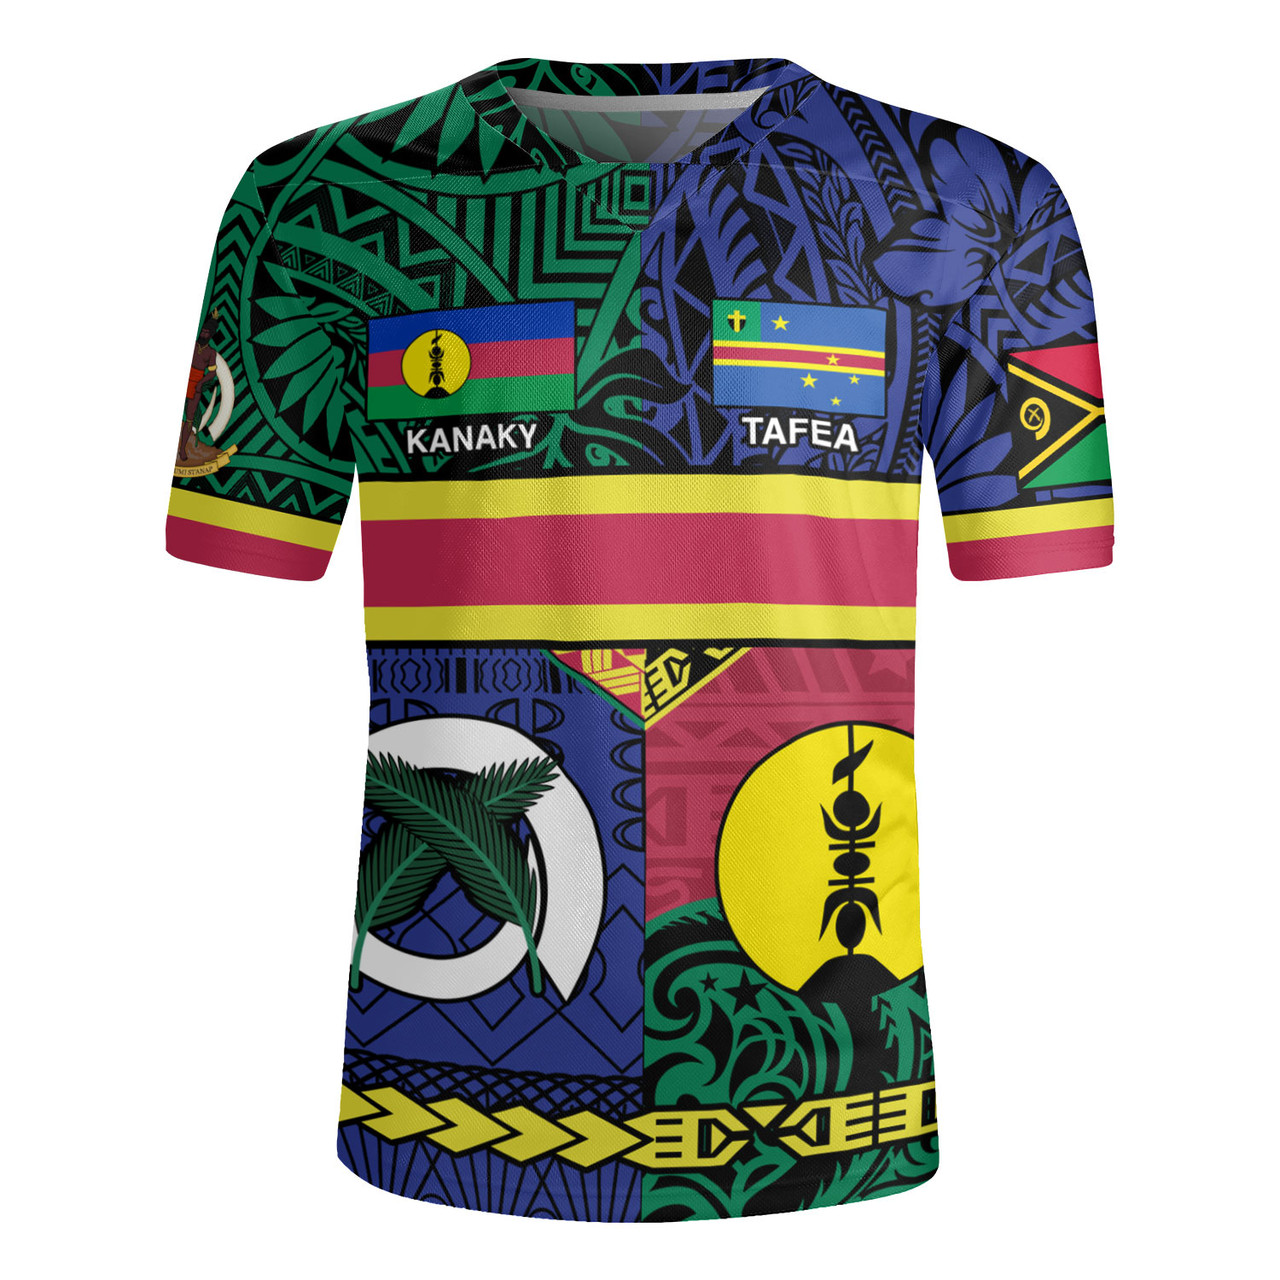 Vanuatu Rugby Jersey Custom Tafea Kanaky Day Tribal Patterns Special Design